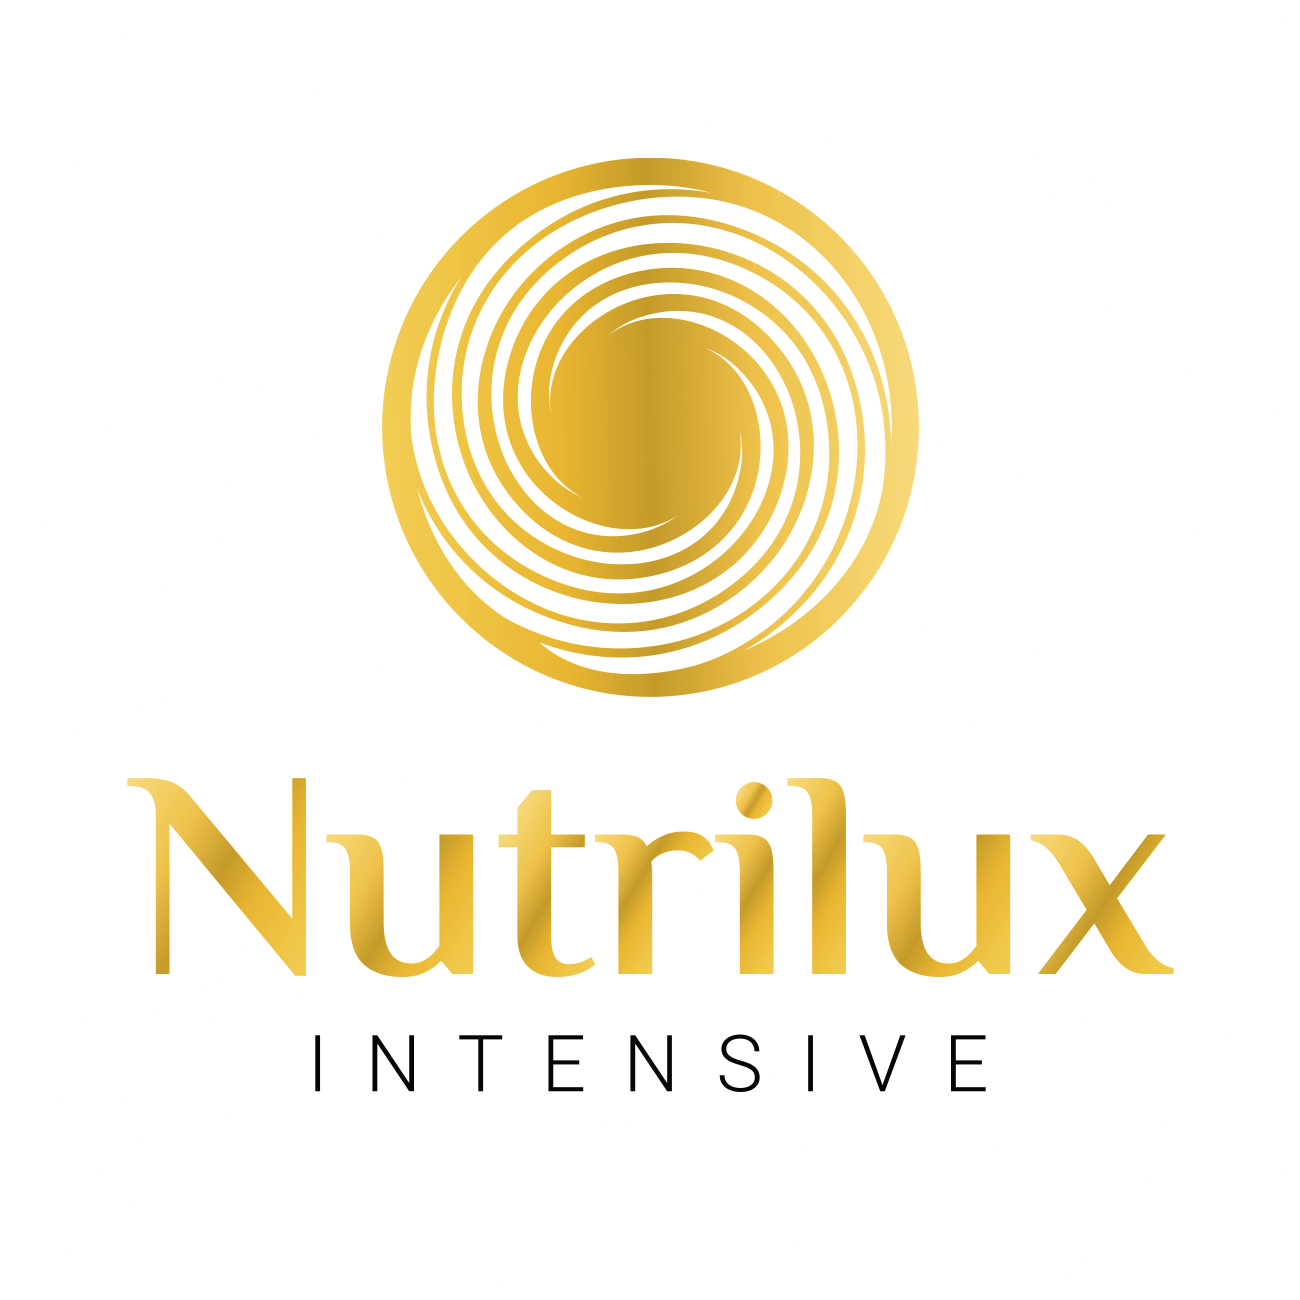 NUTRILUX INTENSIVE